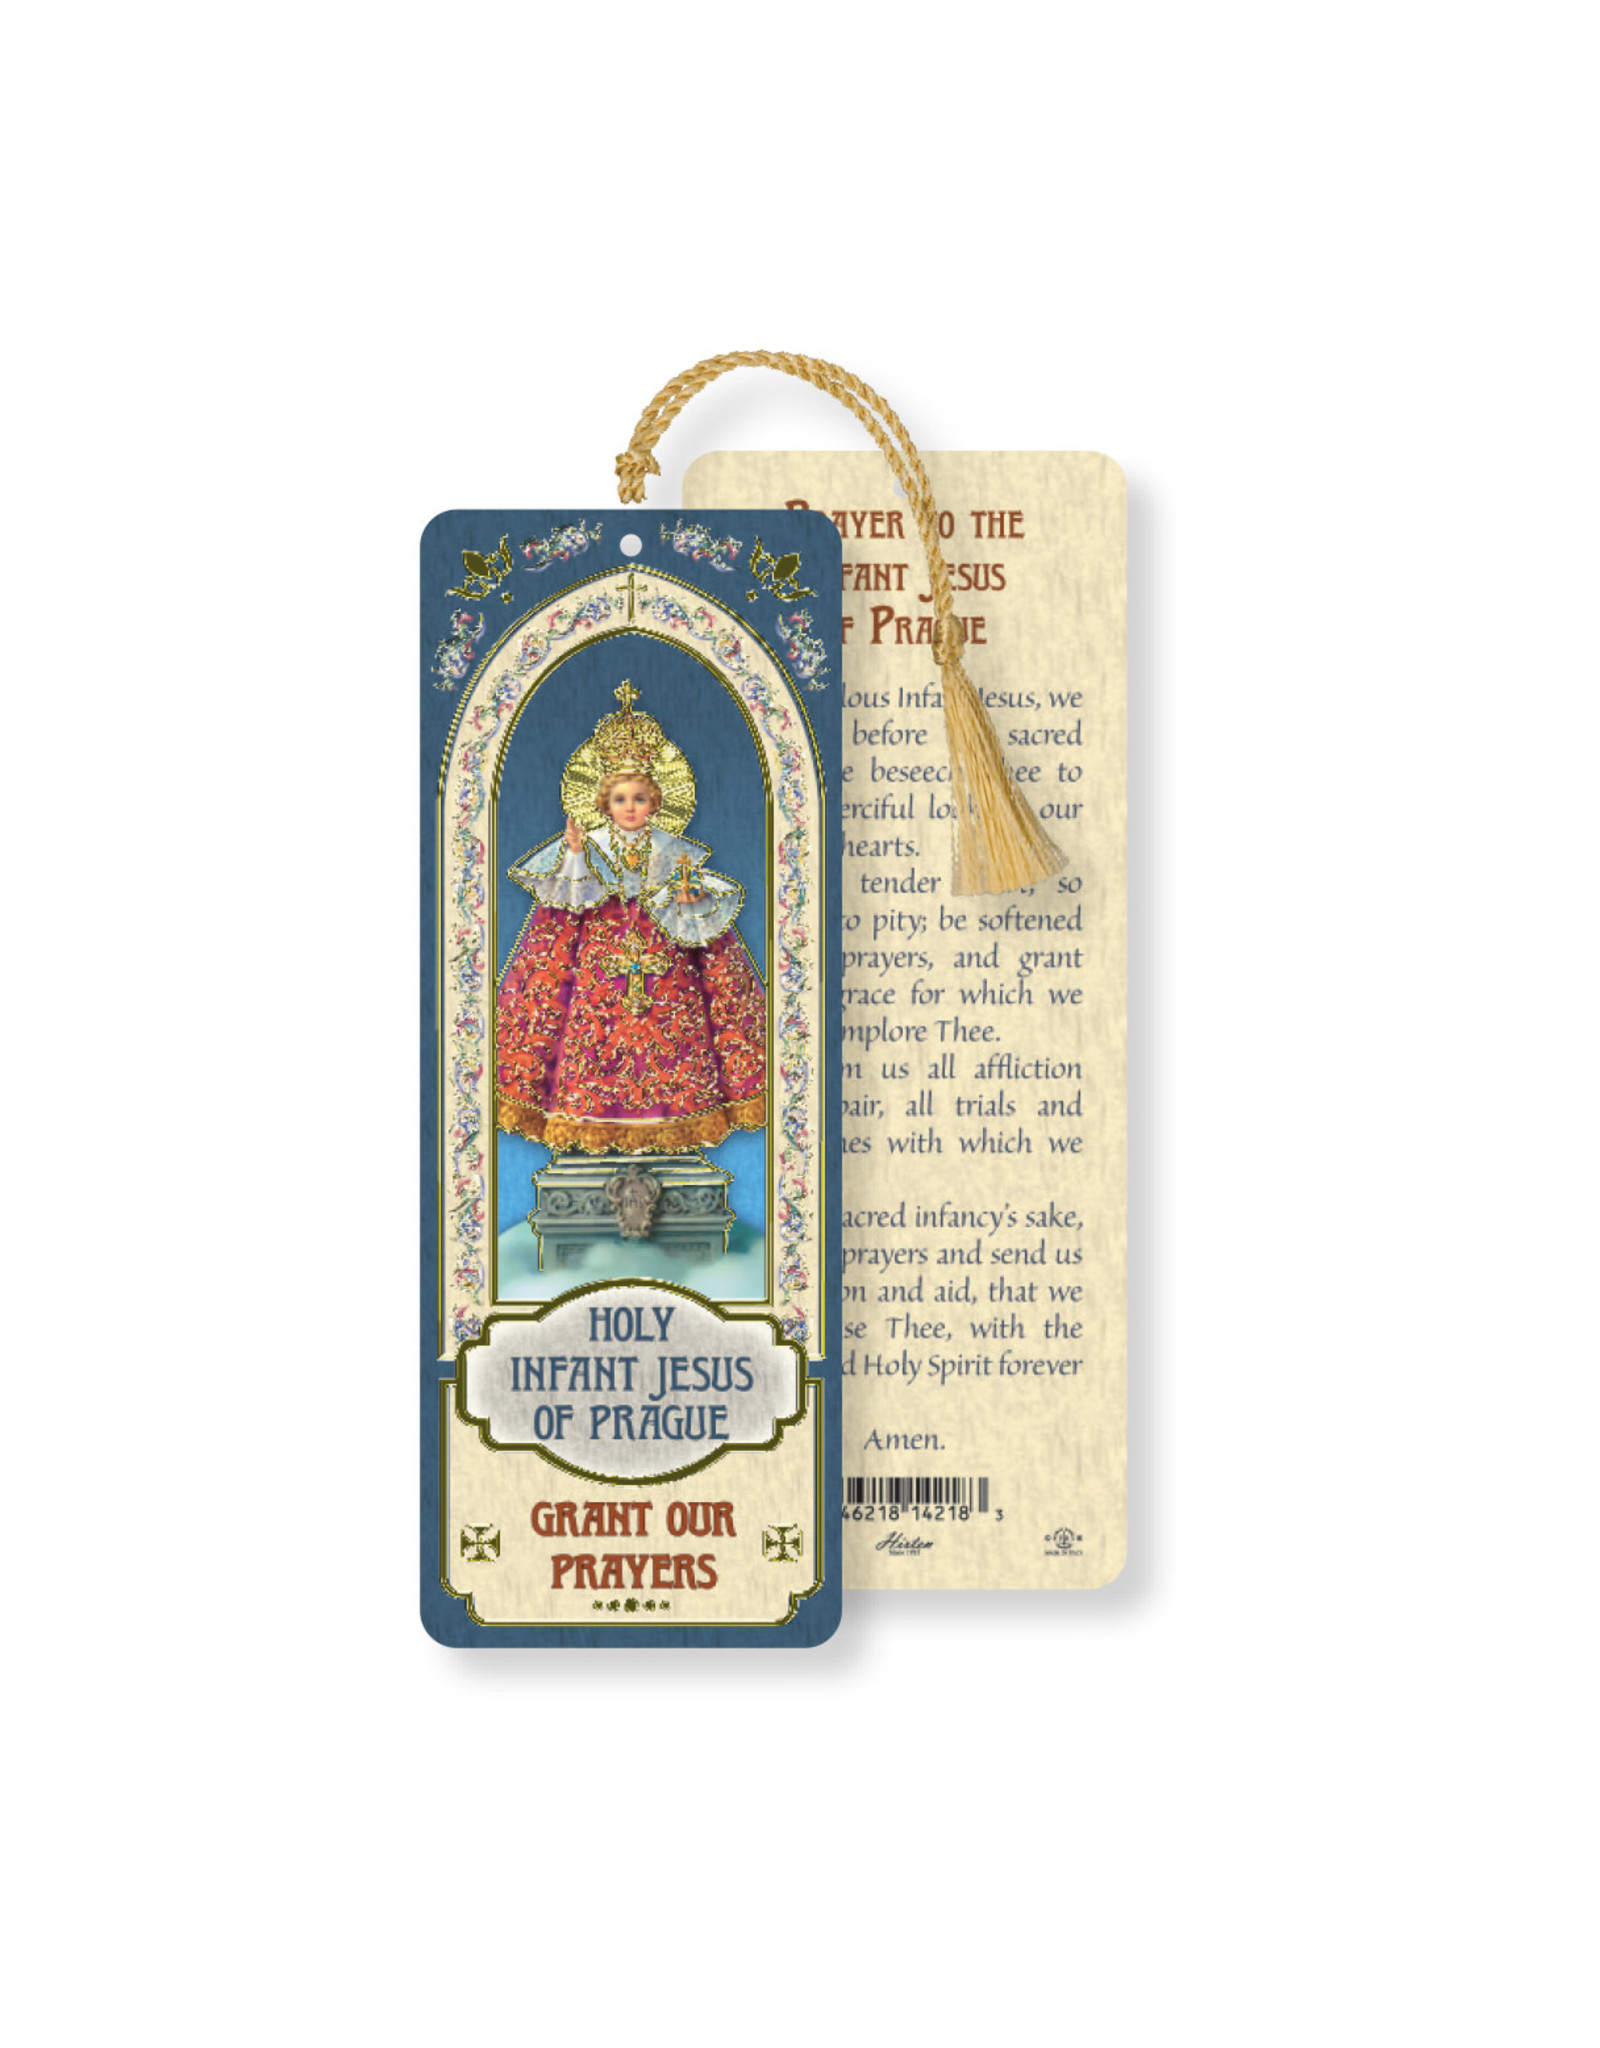 Hirten Laminated Gold Foil Bookmark - Holy Infant Jesus of Prague